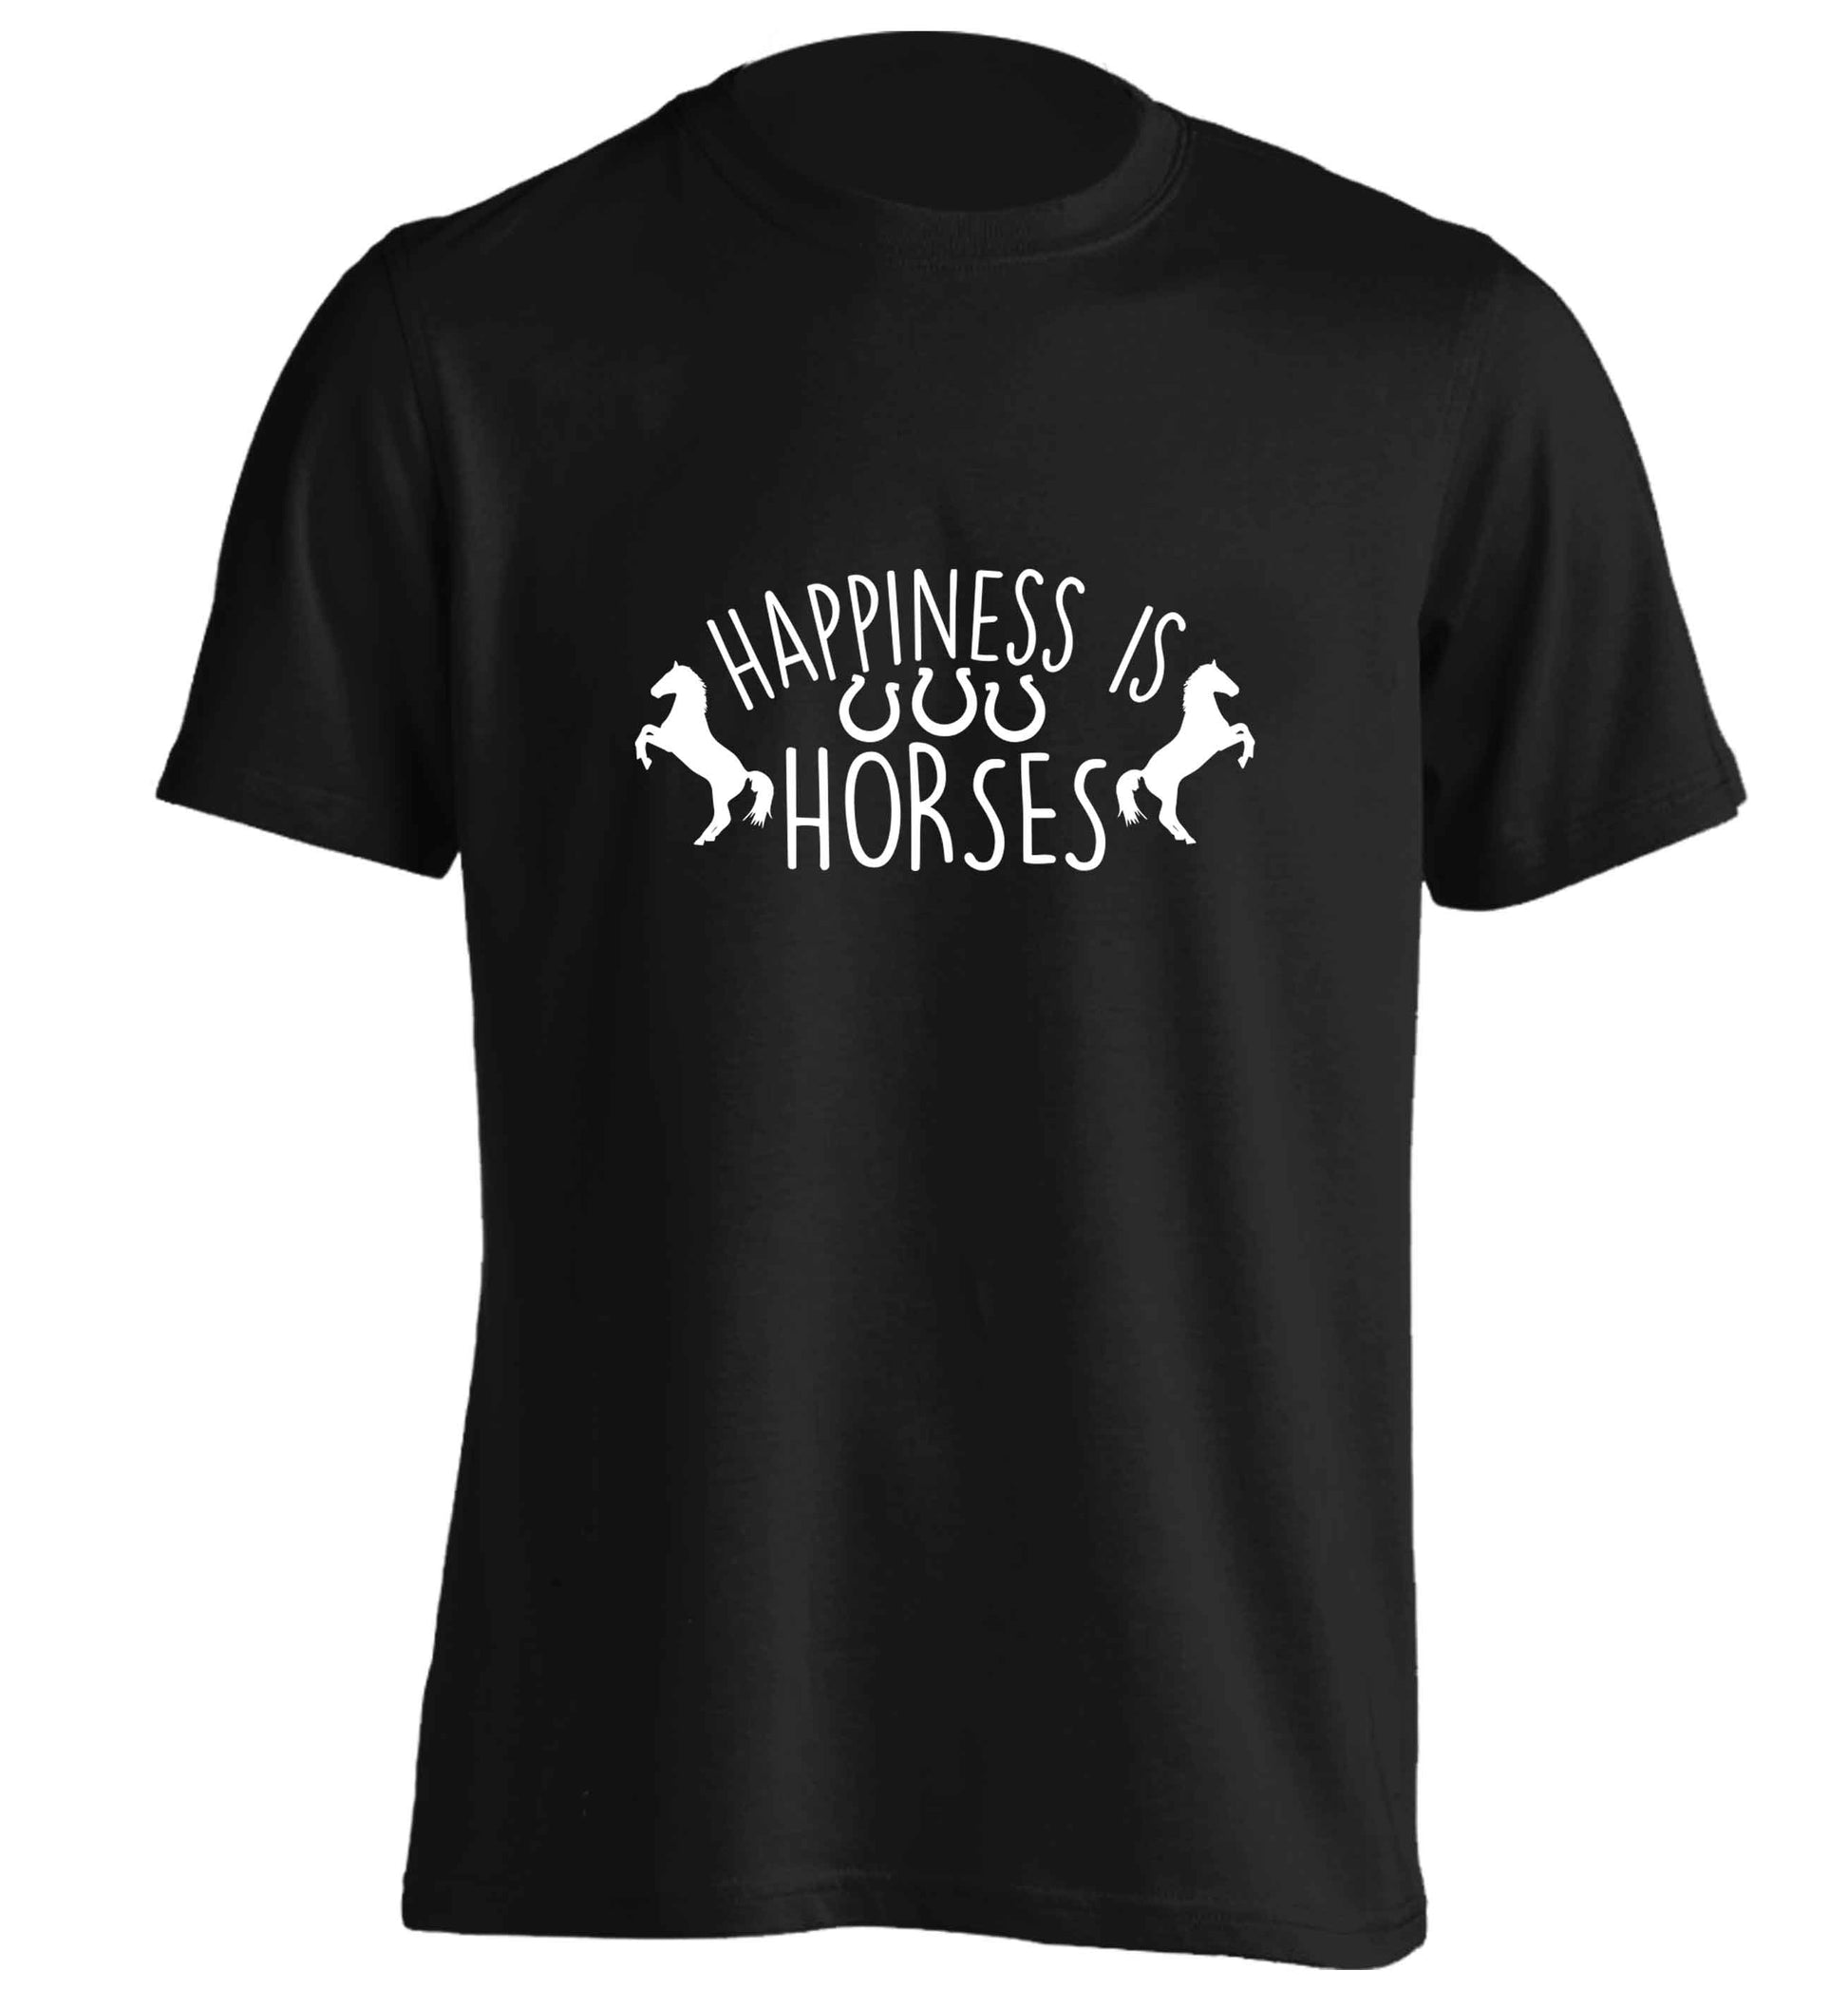 Happiness is horses adults unisex black Tshirt 2XL